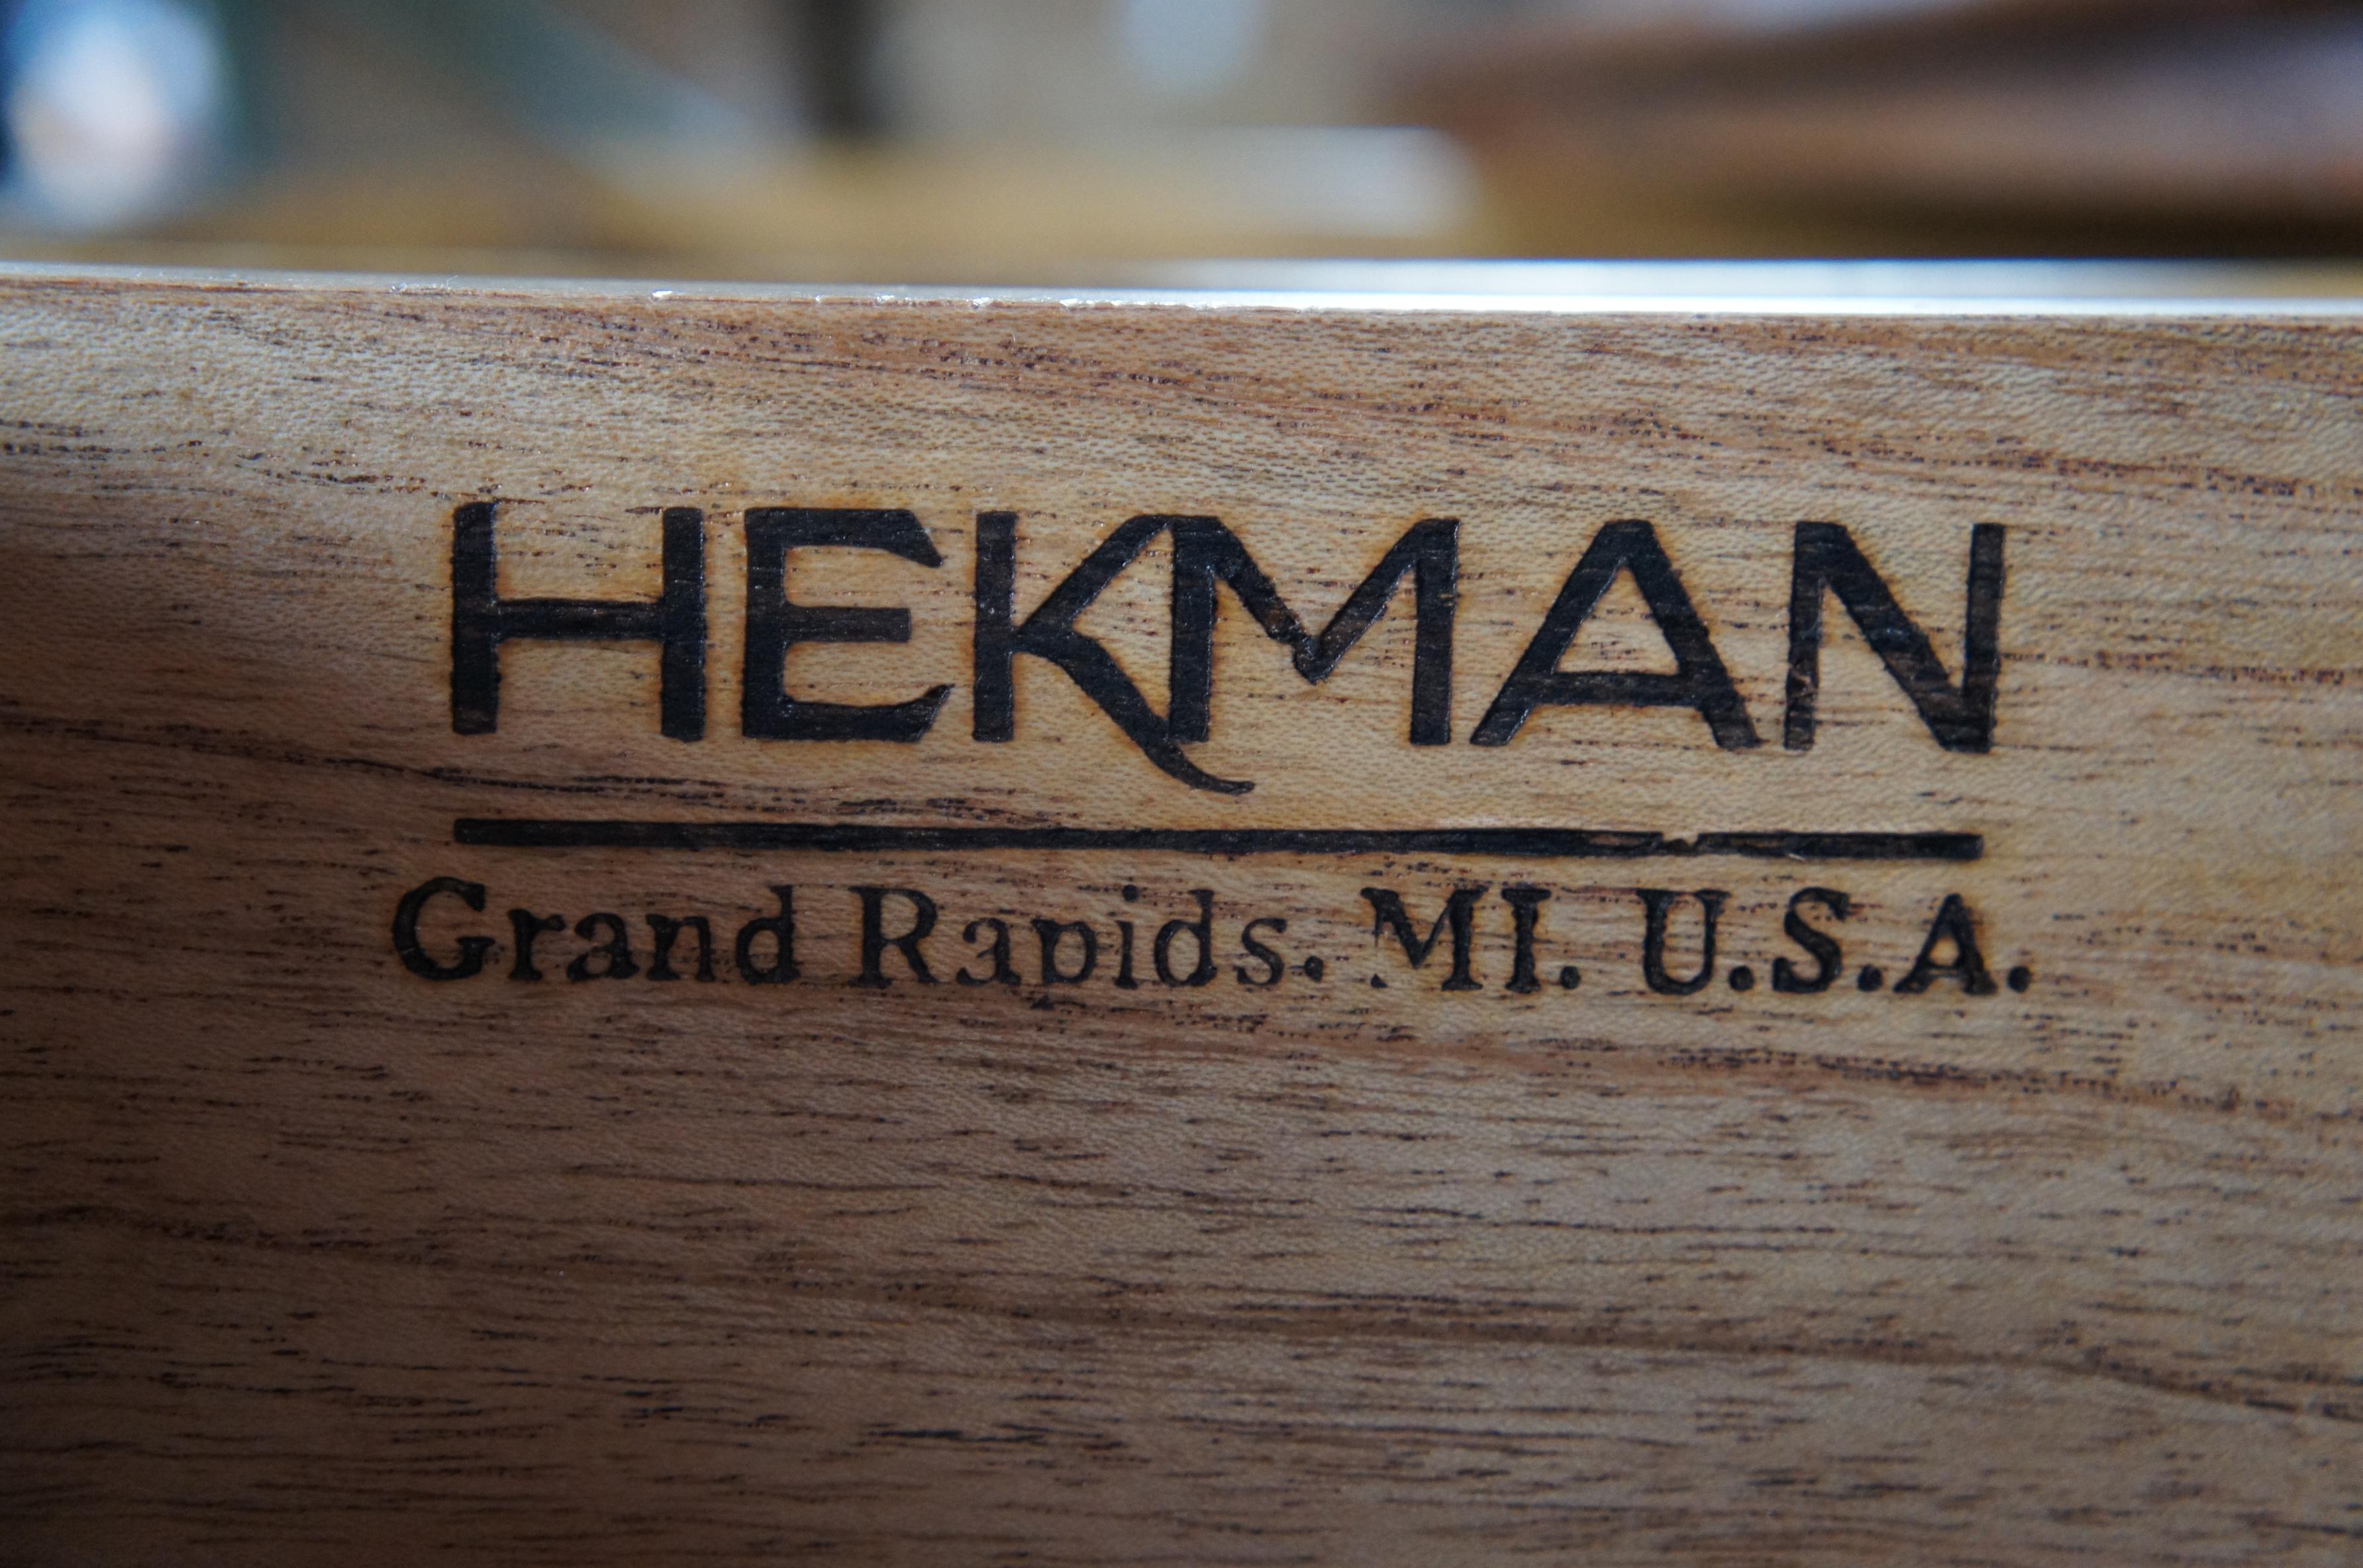 hekman leather top desk